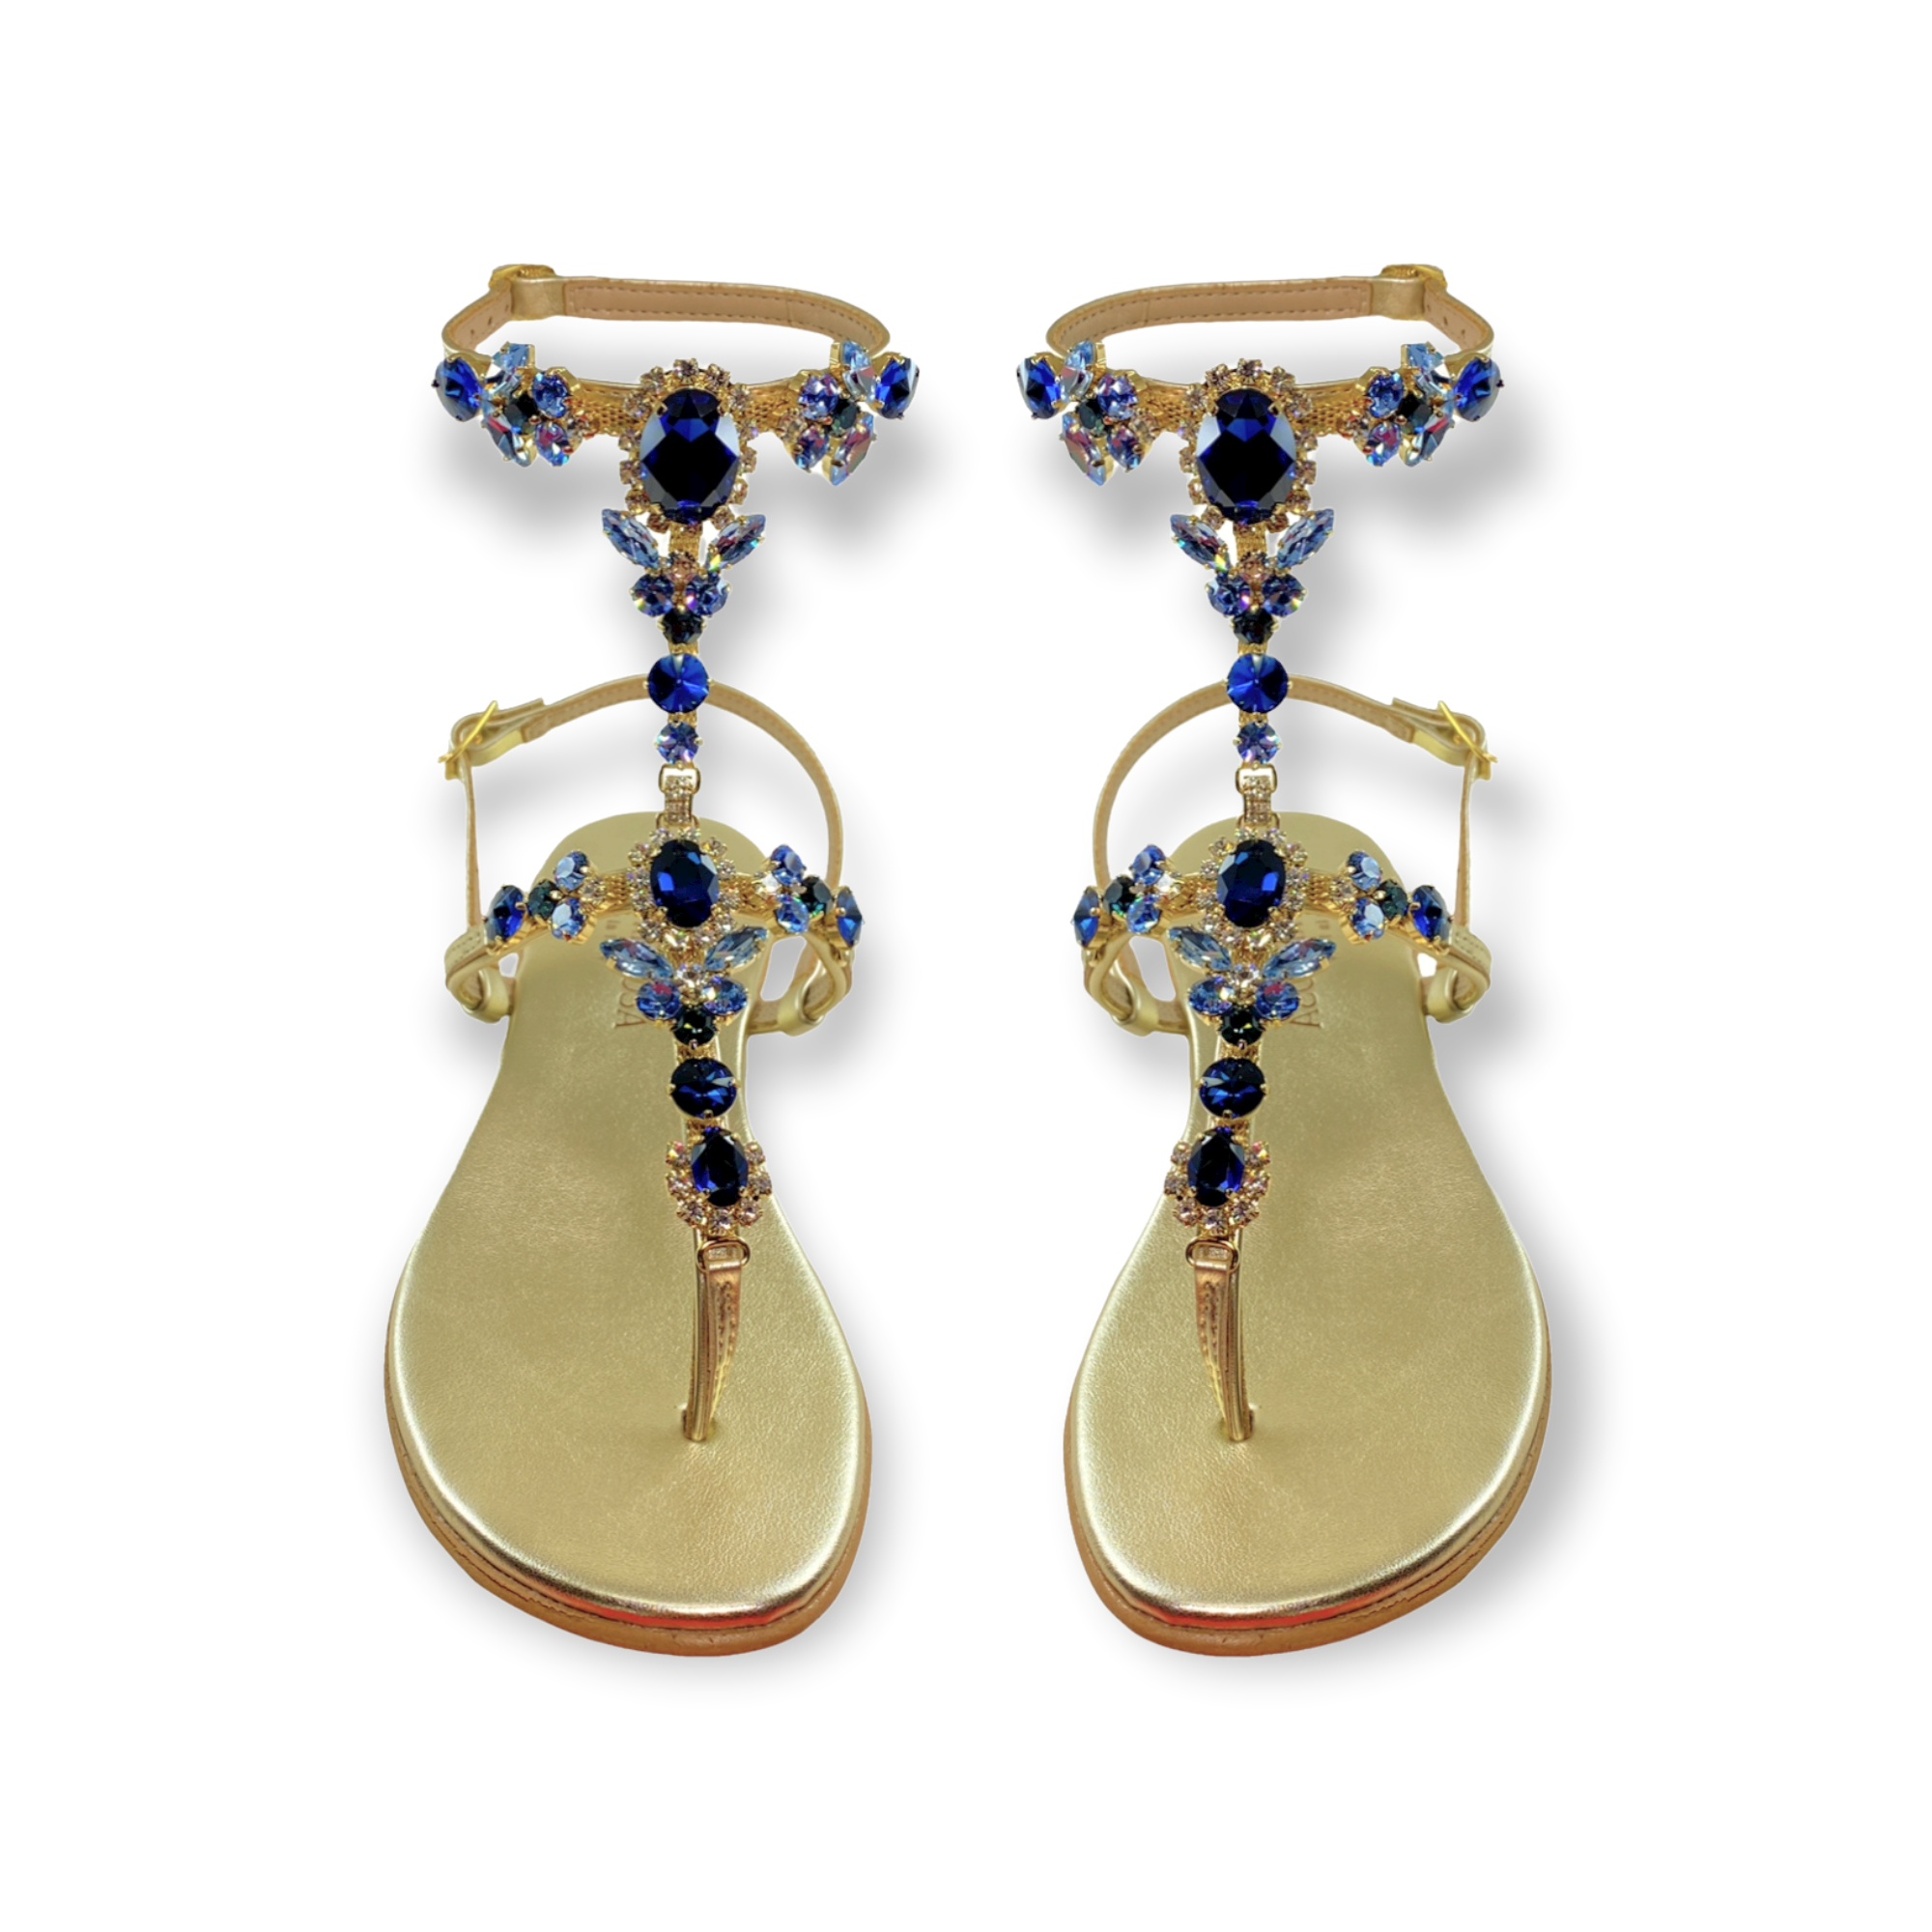 Lucrezia blue-crystal flat jewel sandal